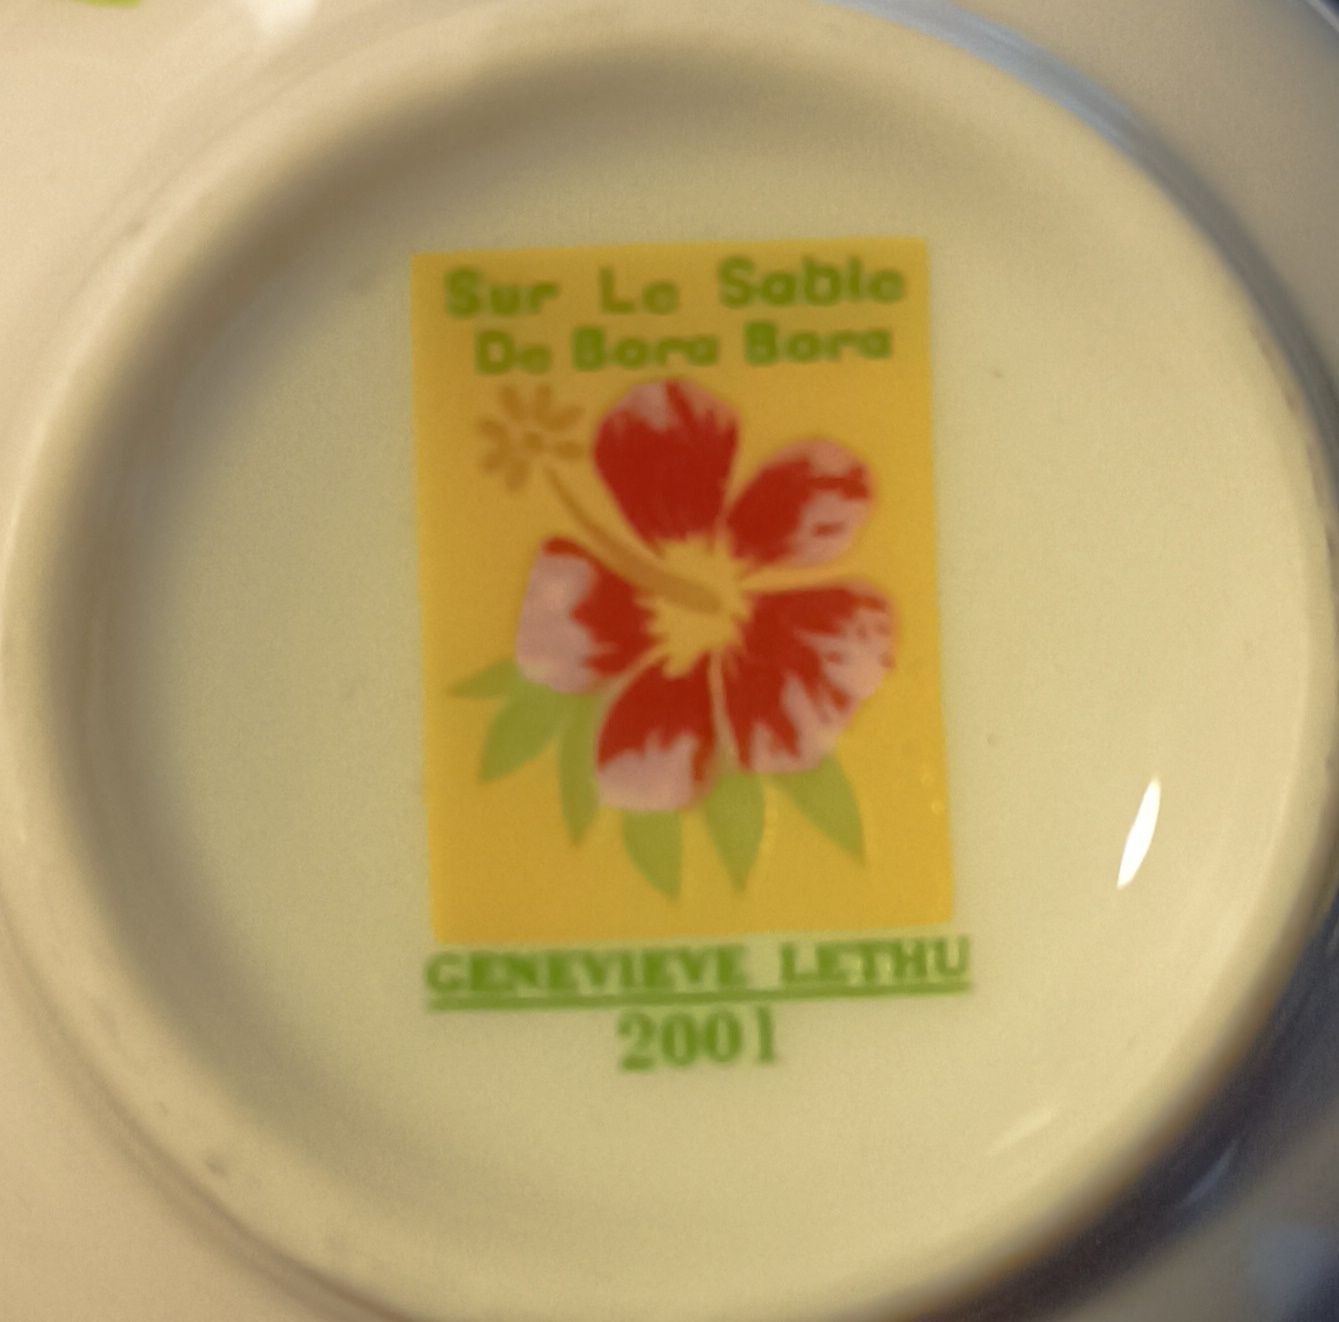 Conjunto de café Geneviève Lethu